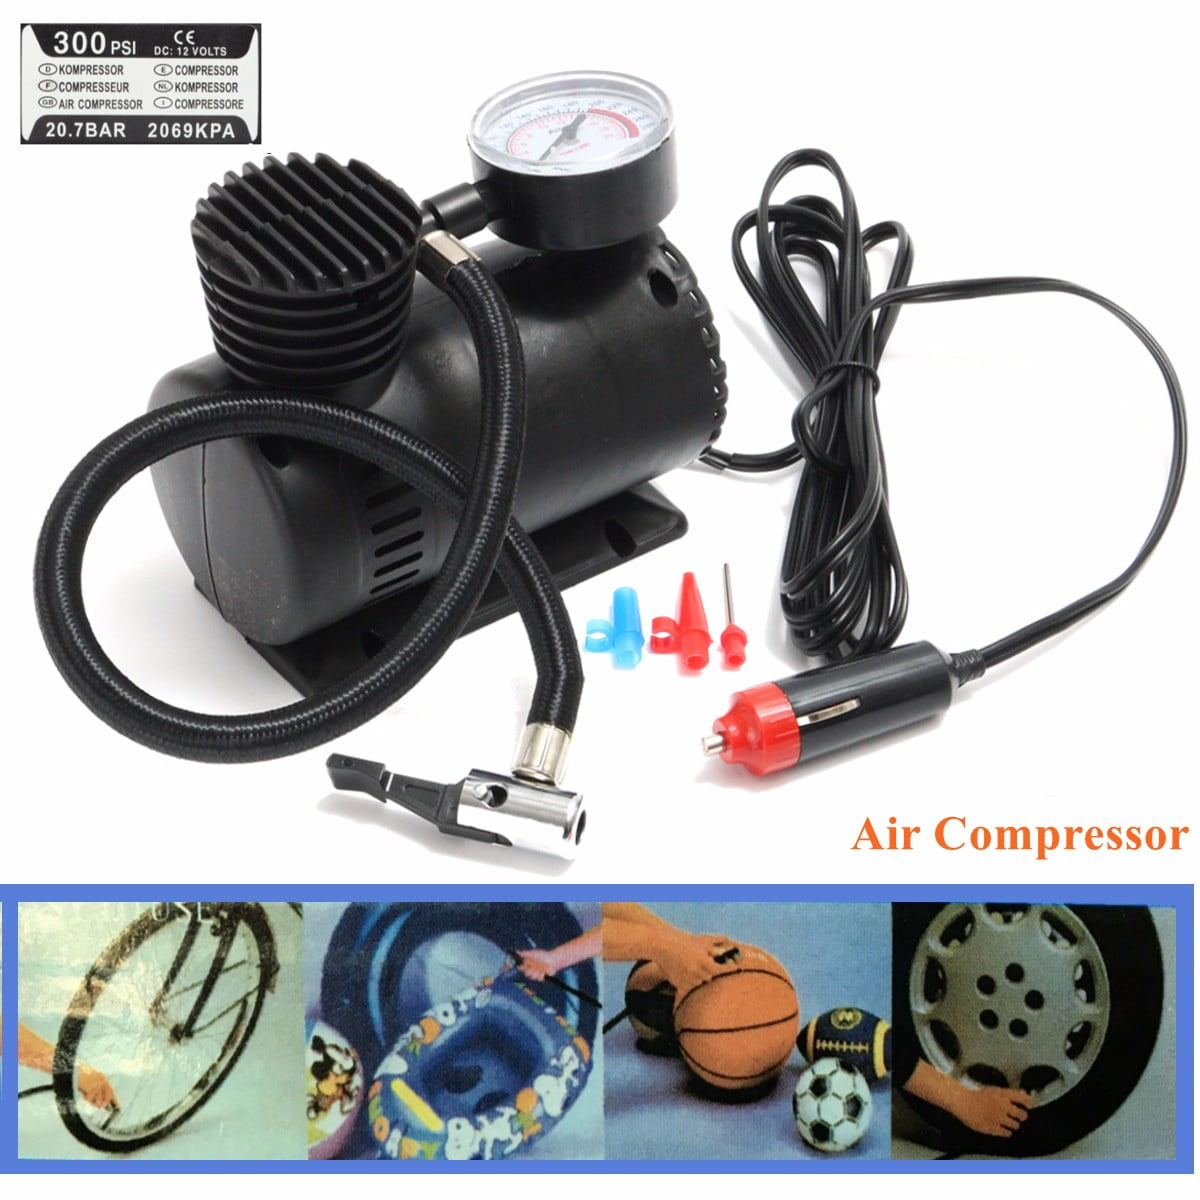 Details about   NEW 300PSI 12V Mini Air Compressor Auto Car Electric Tire Air Inflator Pump Kits 